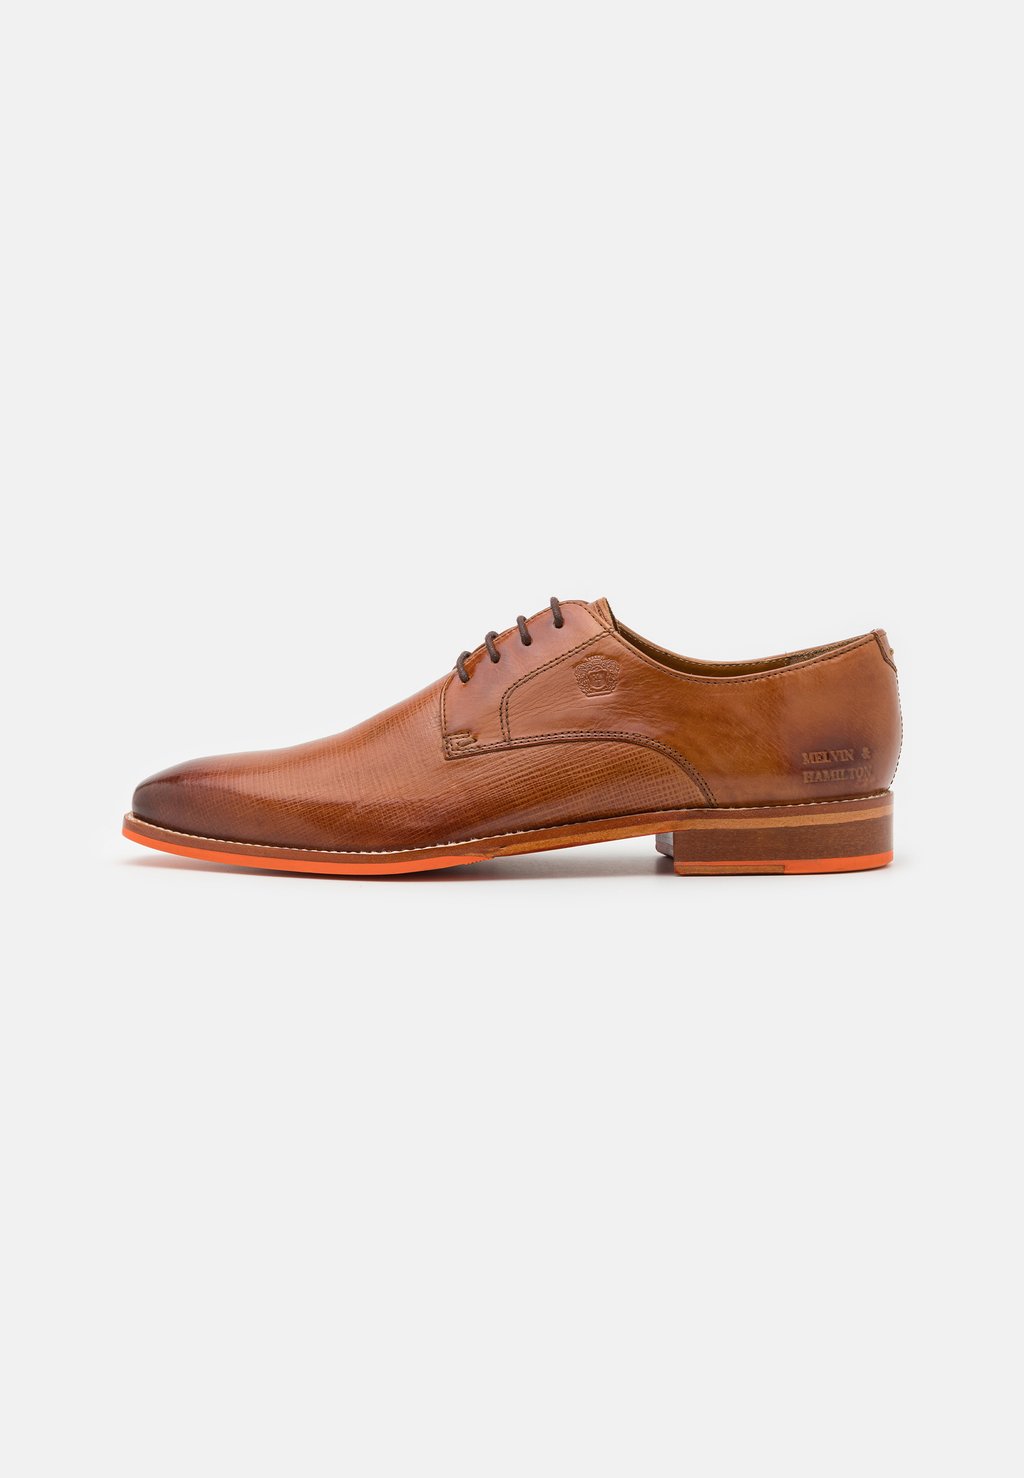 Элегантные туфли на шнуровке Martin 1 Melvin & Hamilton, цвет haina/tan/rich tan/orange